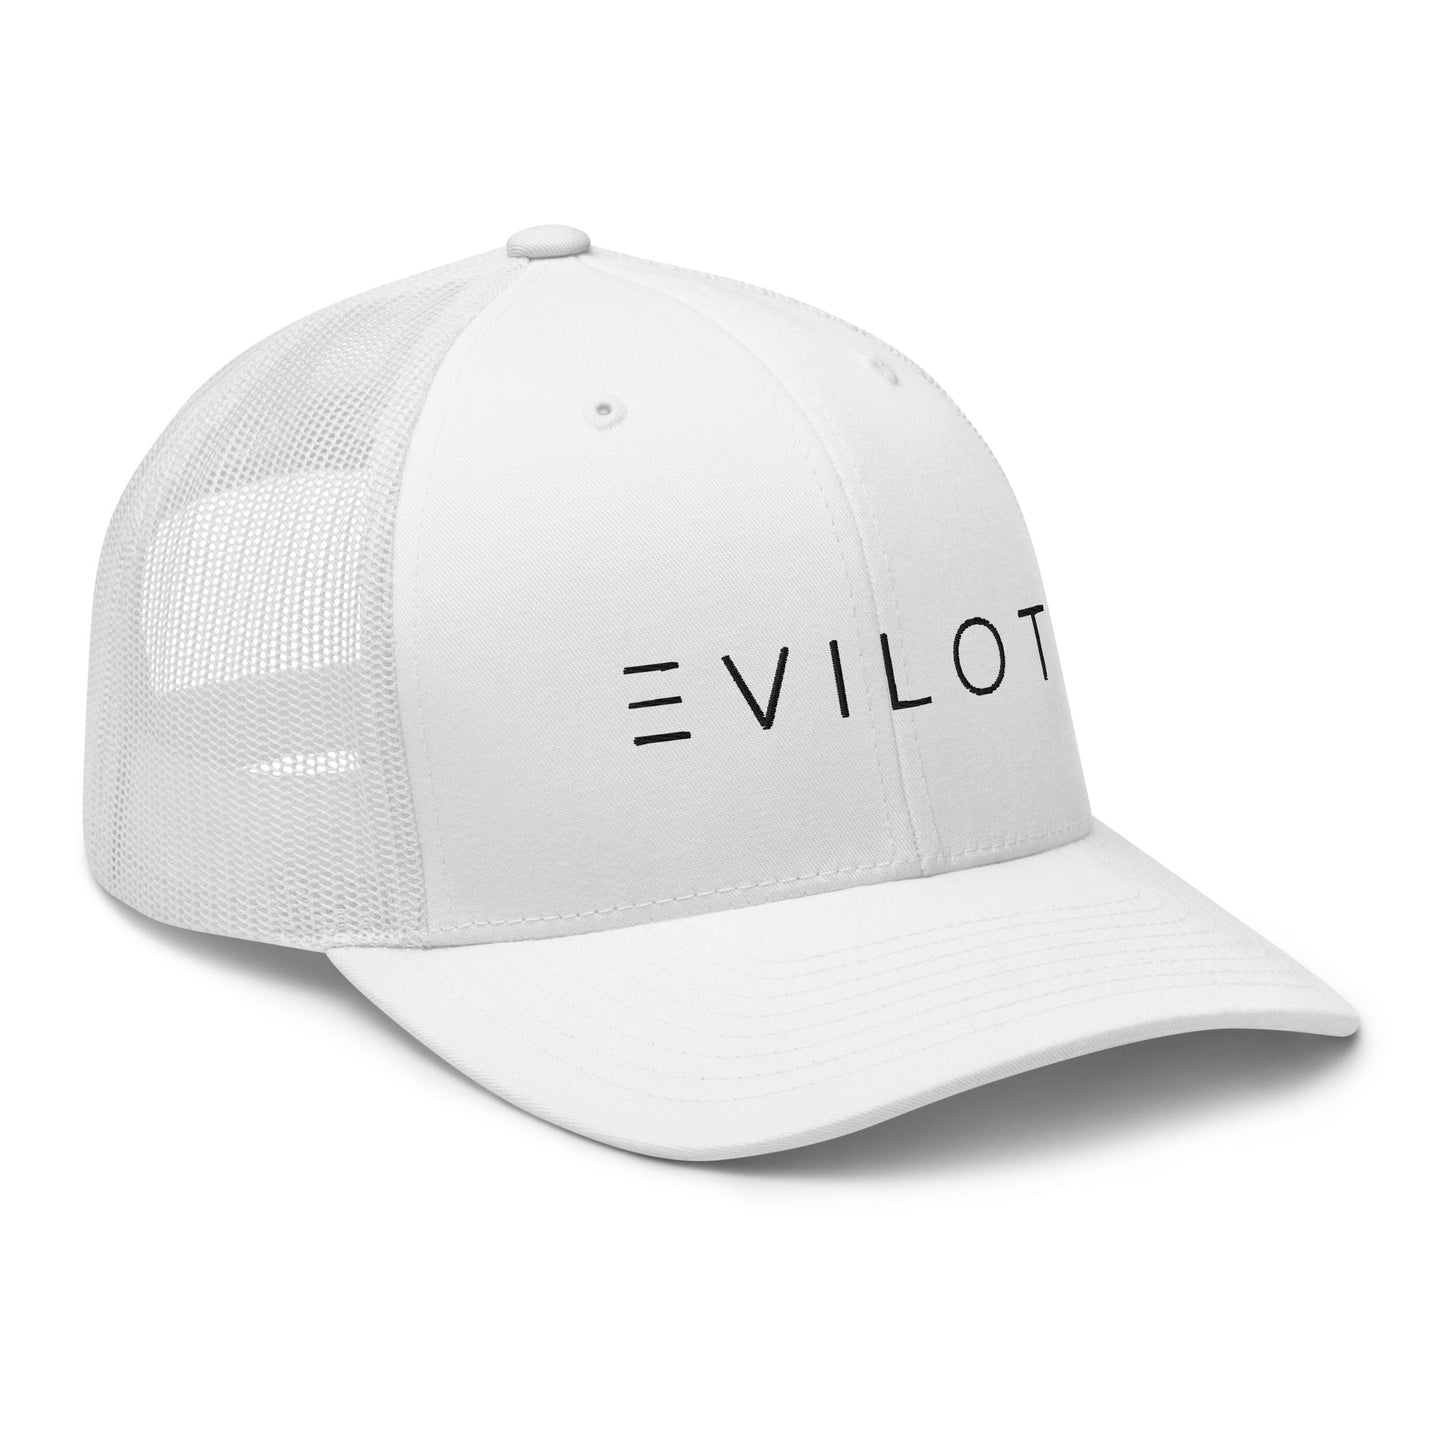 Evilot Trucker Cap - White - Evilot Enterprises